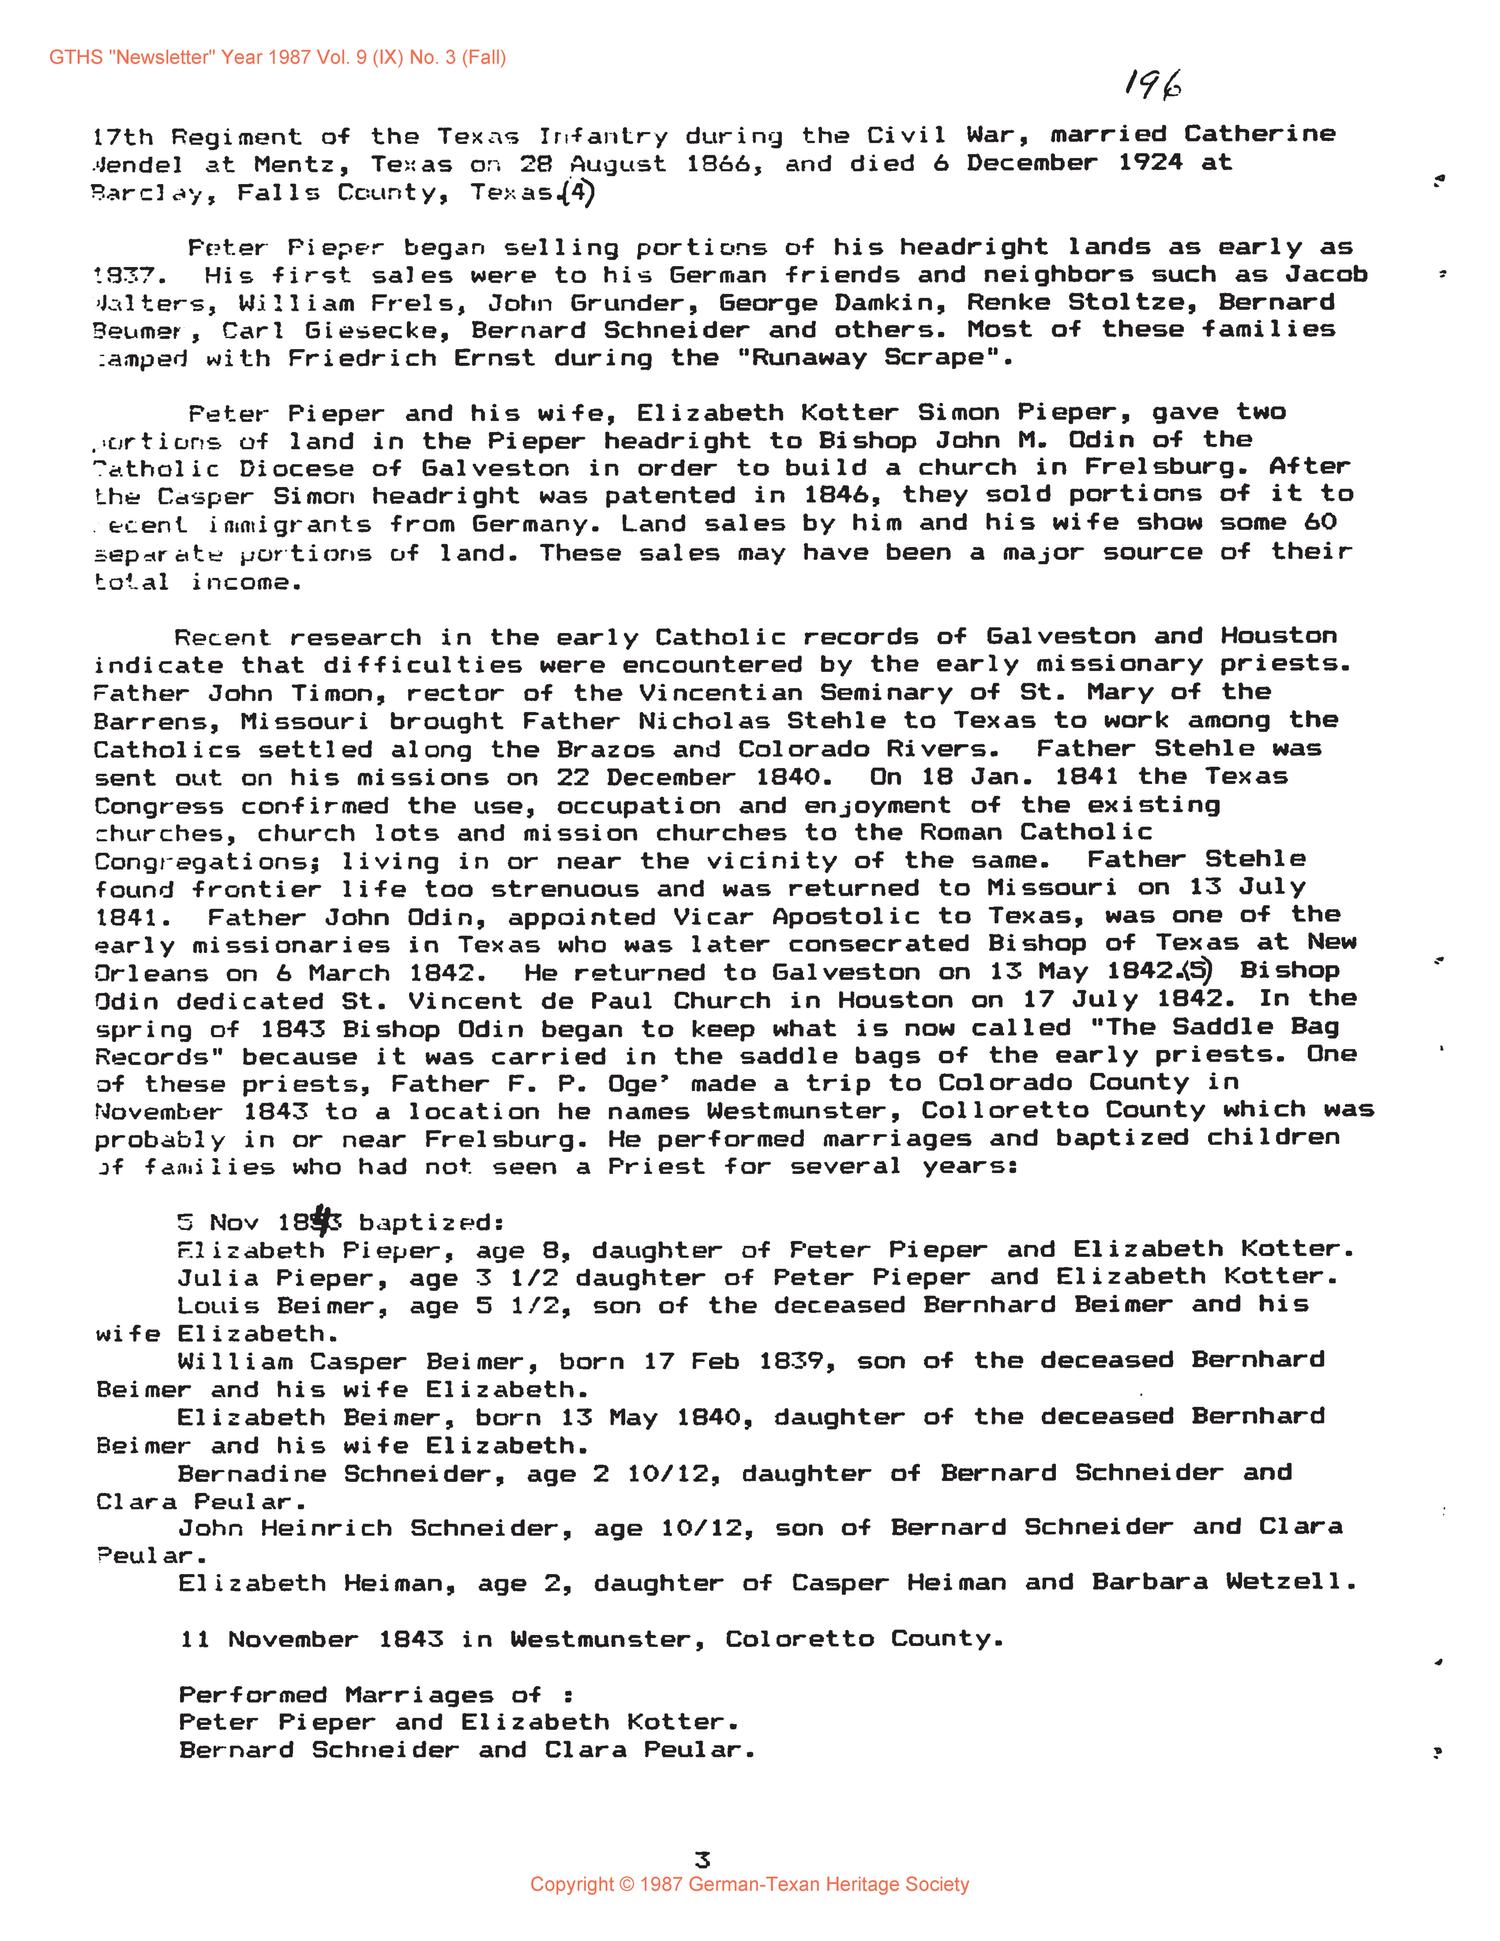 German-Texan Heritage Society Newsletter, Volume 9, Number 3, Fall 1987
                                                
                                                    196
                                                